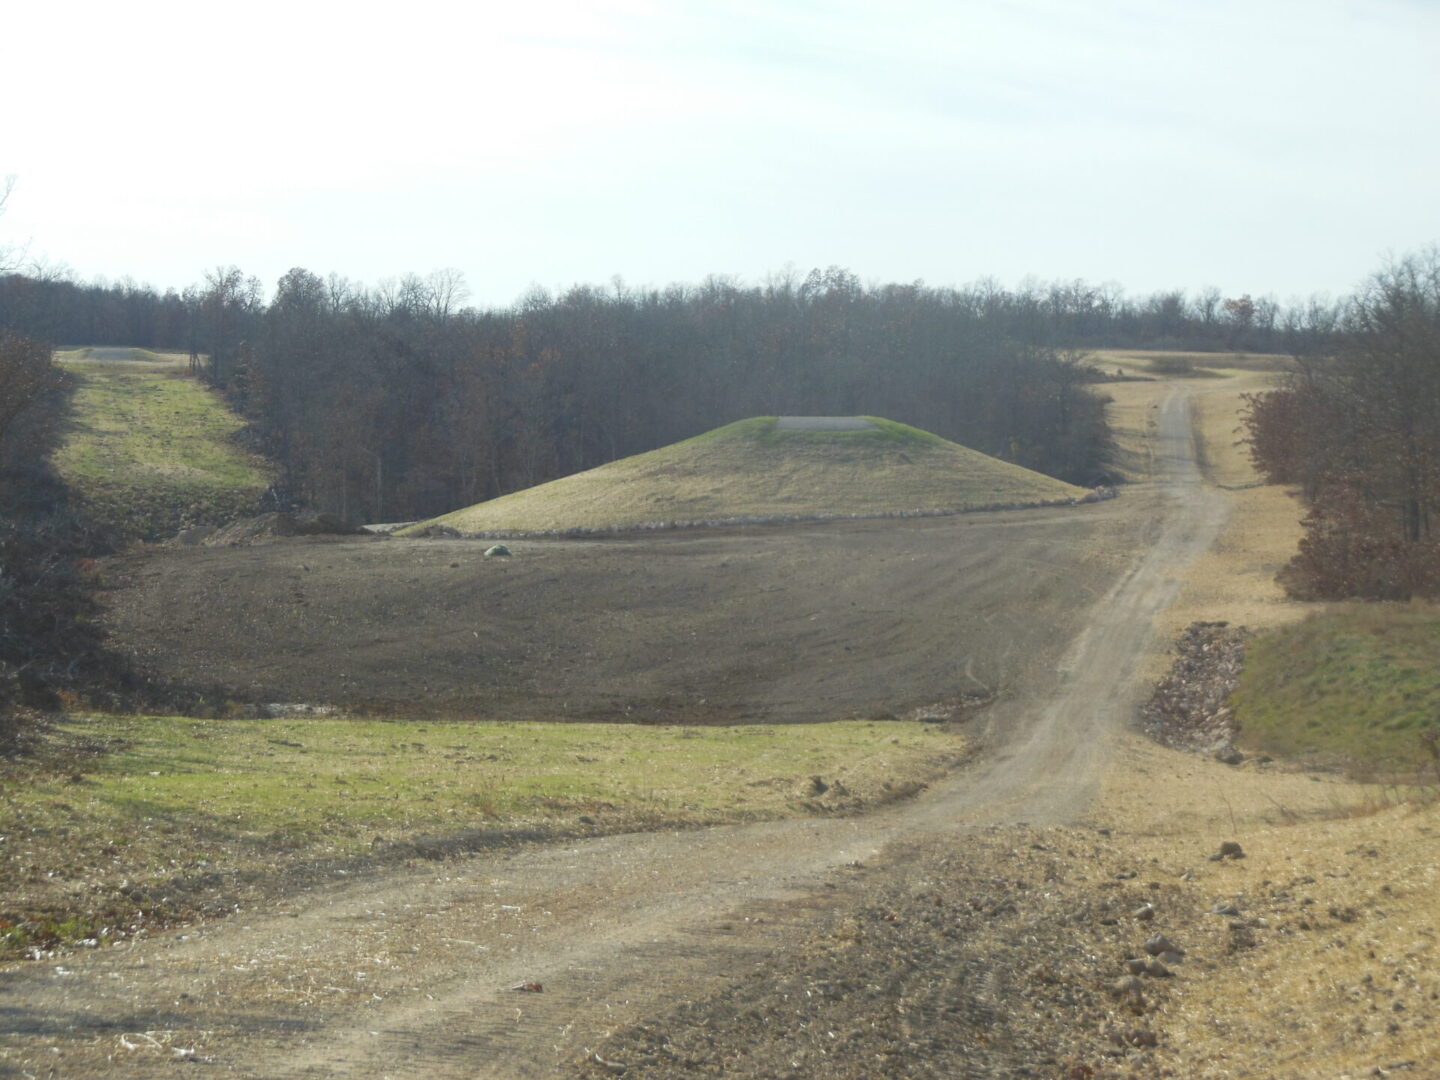 A dirt road winding towards a grassy hill in a barren landscape.